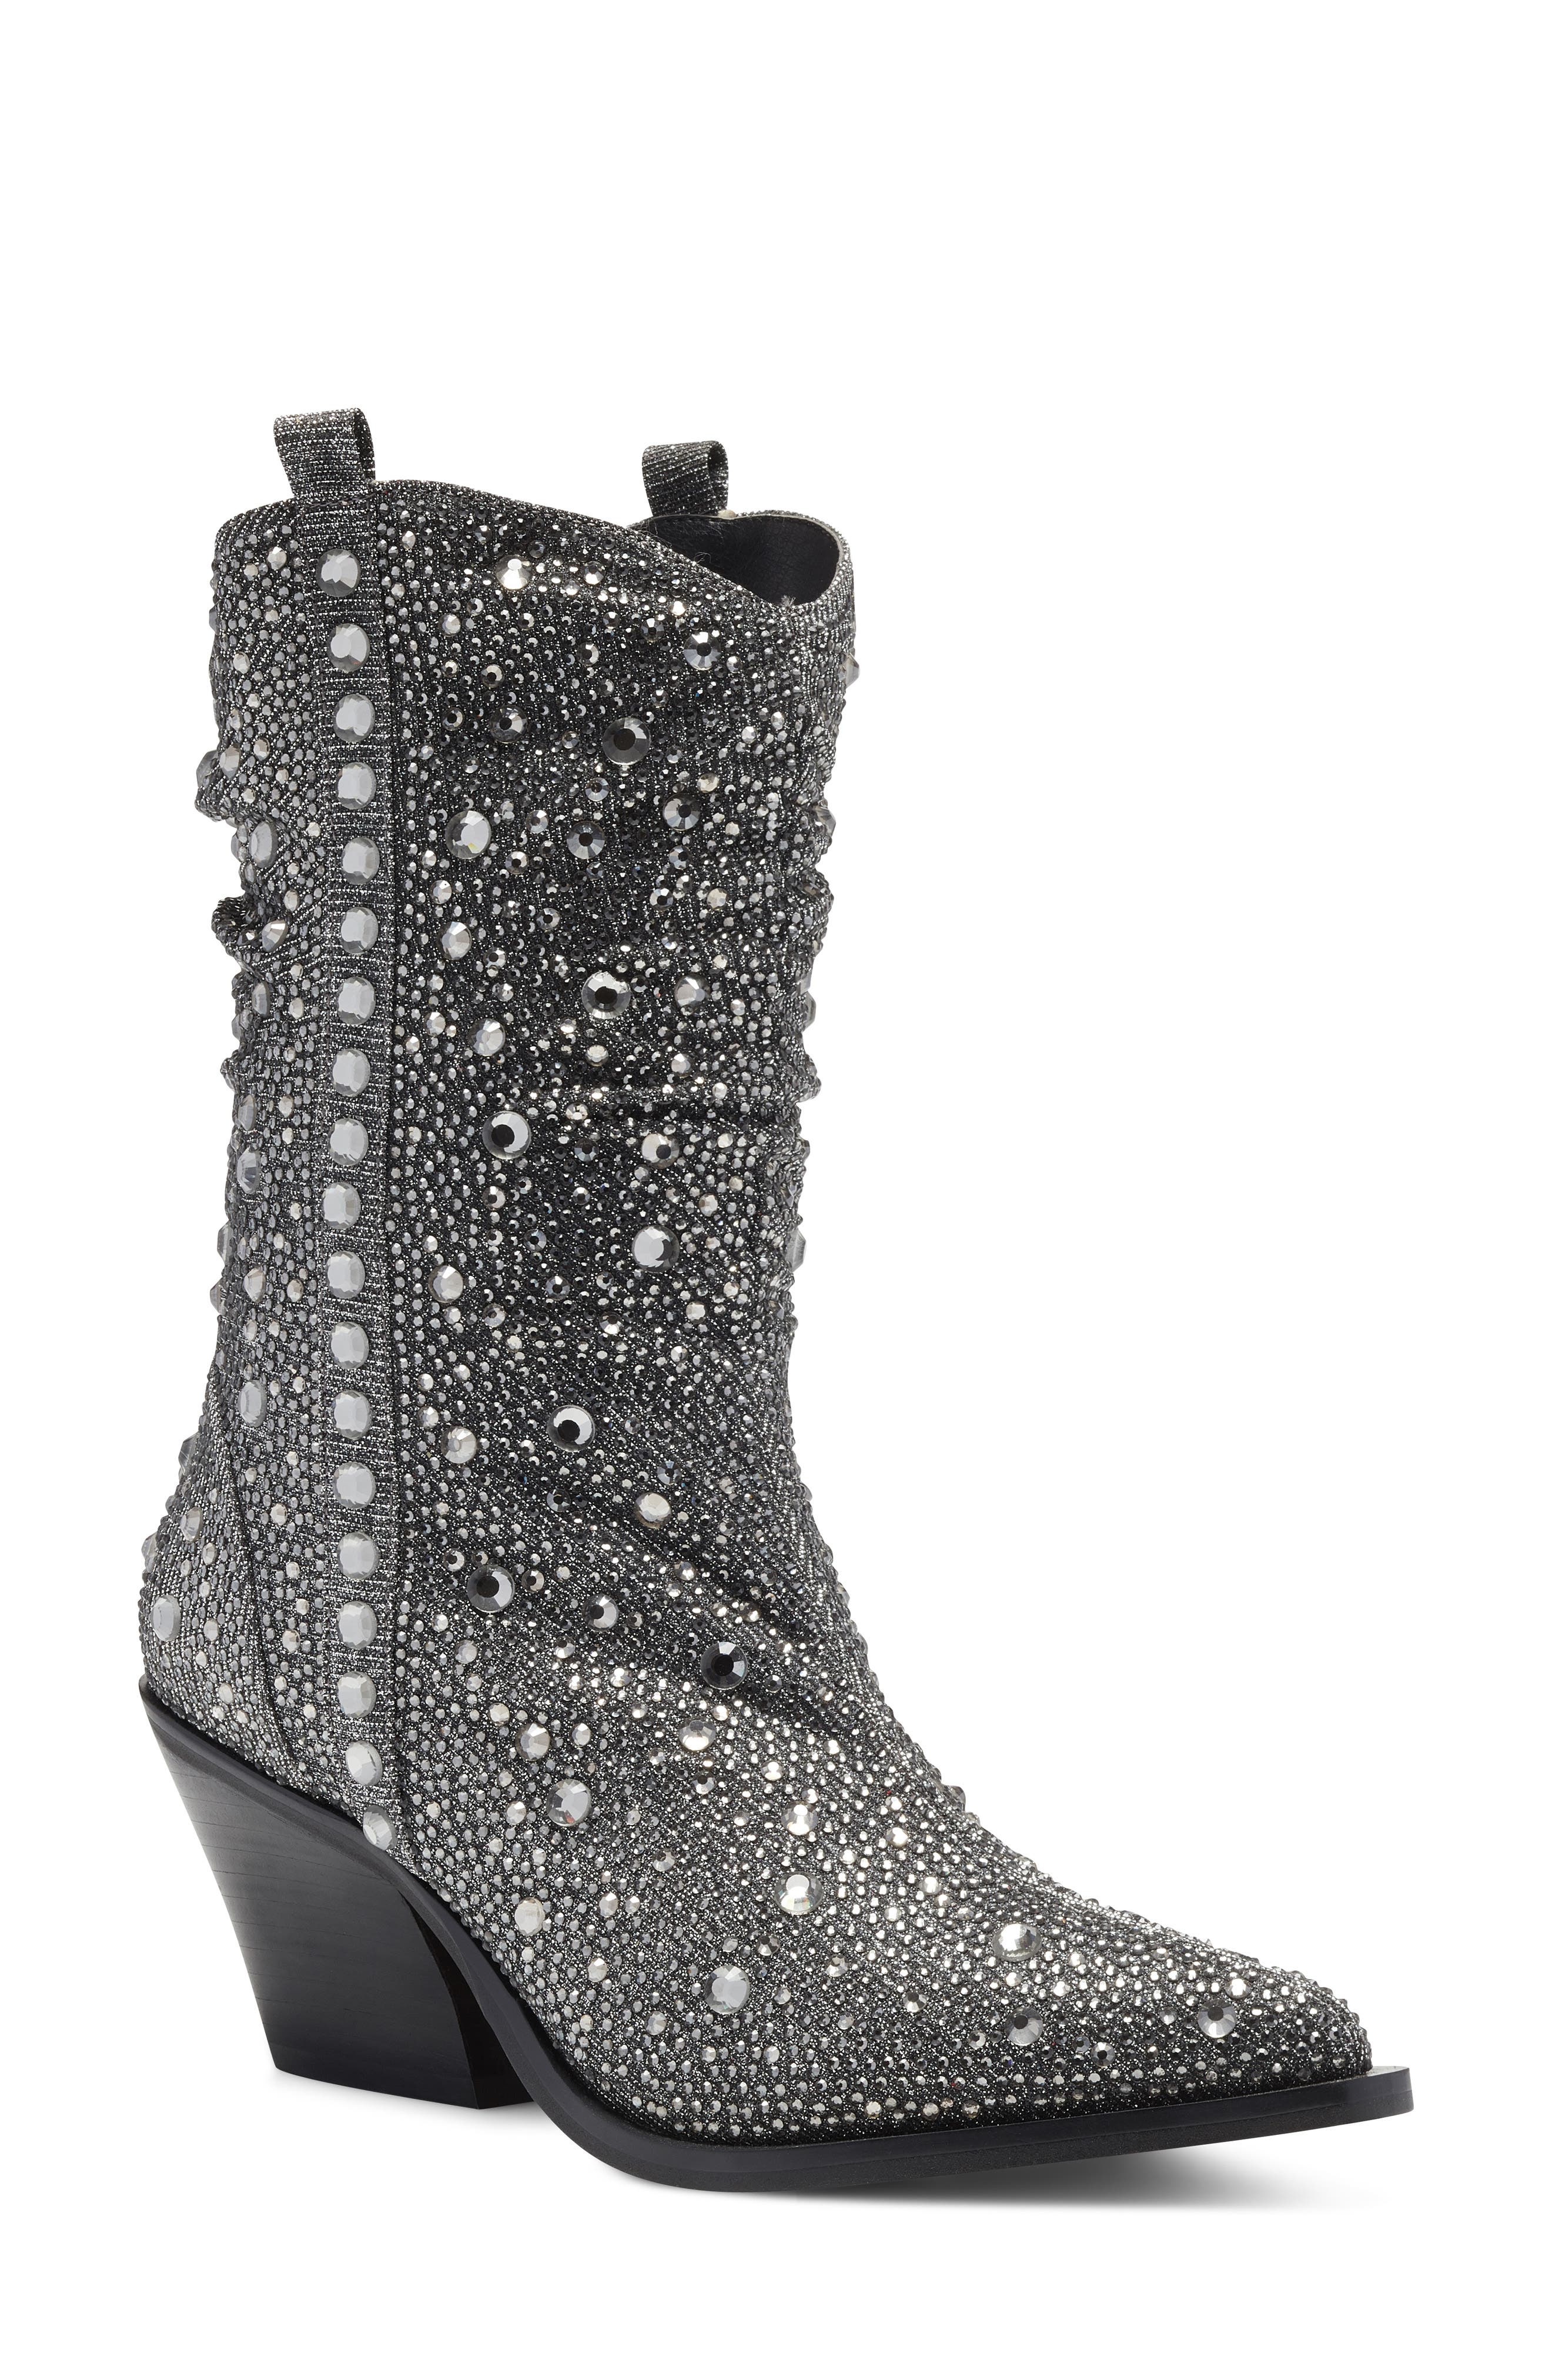 jessica simpson glitter boots